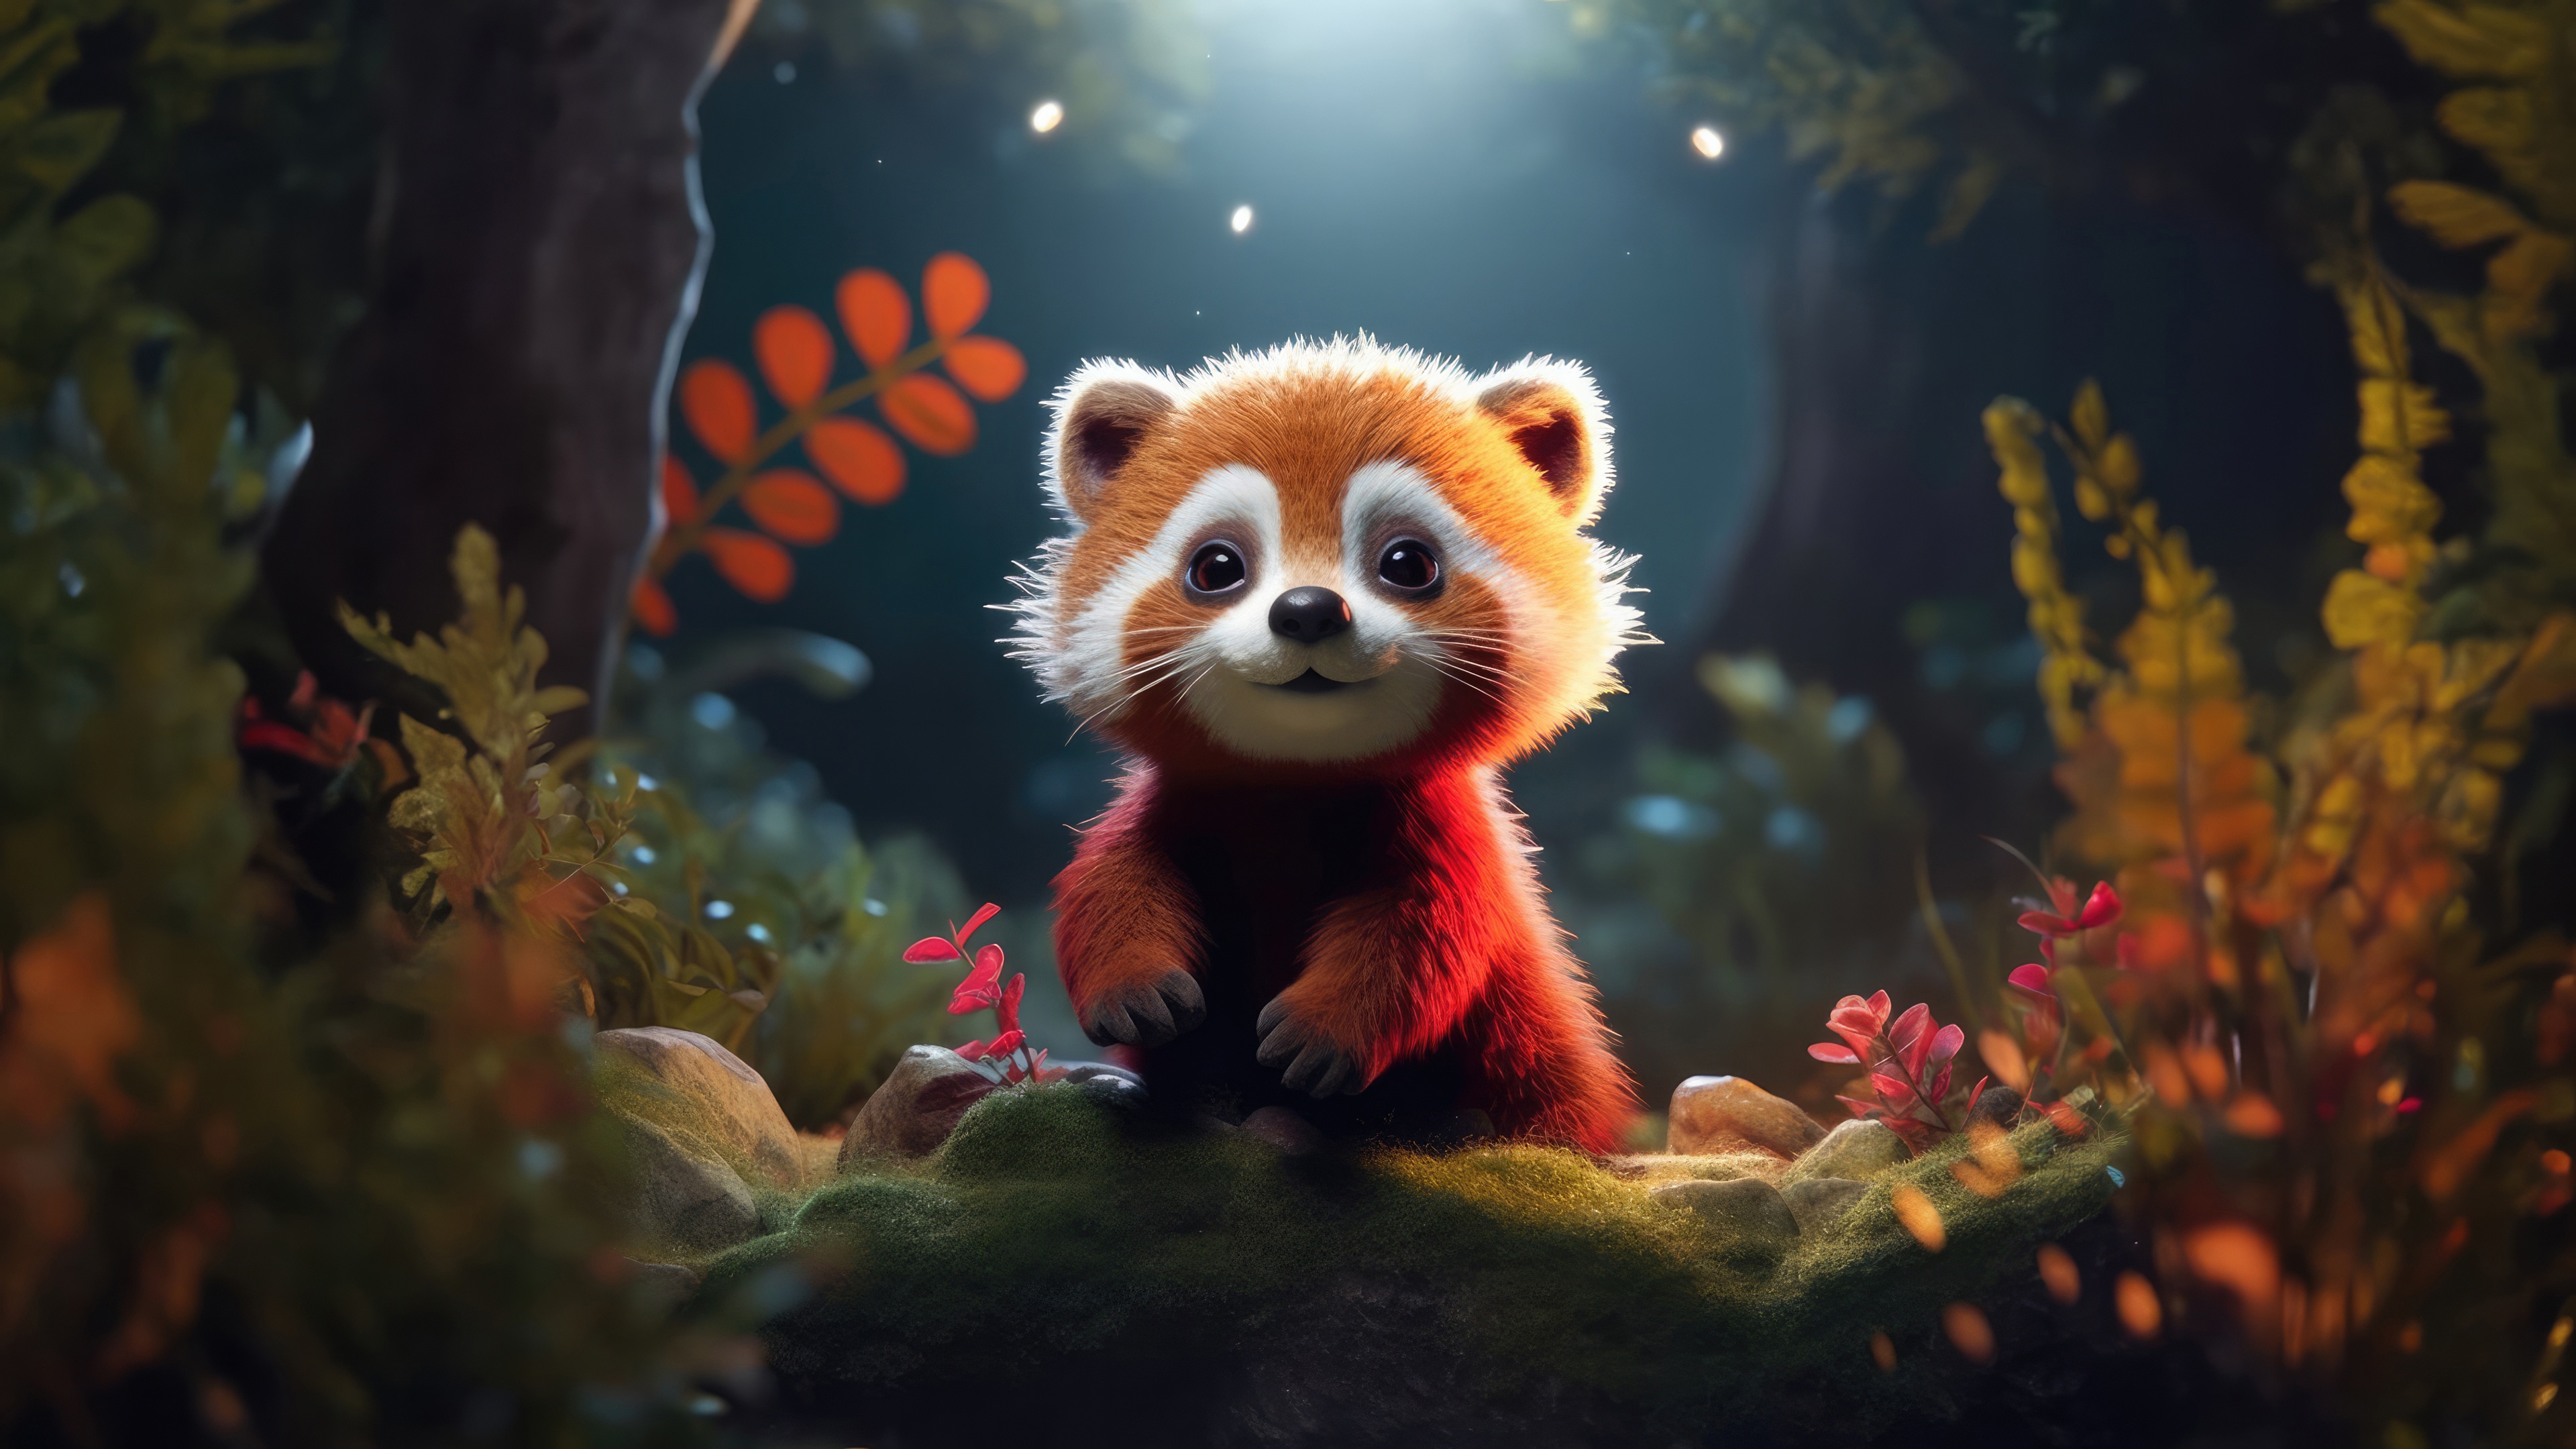 HD wallpaper, Forest, Adorable, Cute Animal, Red Panda, Ai Art